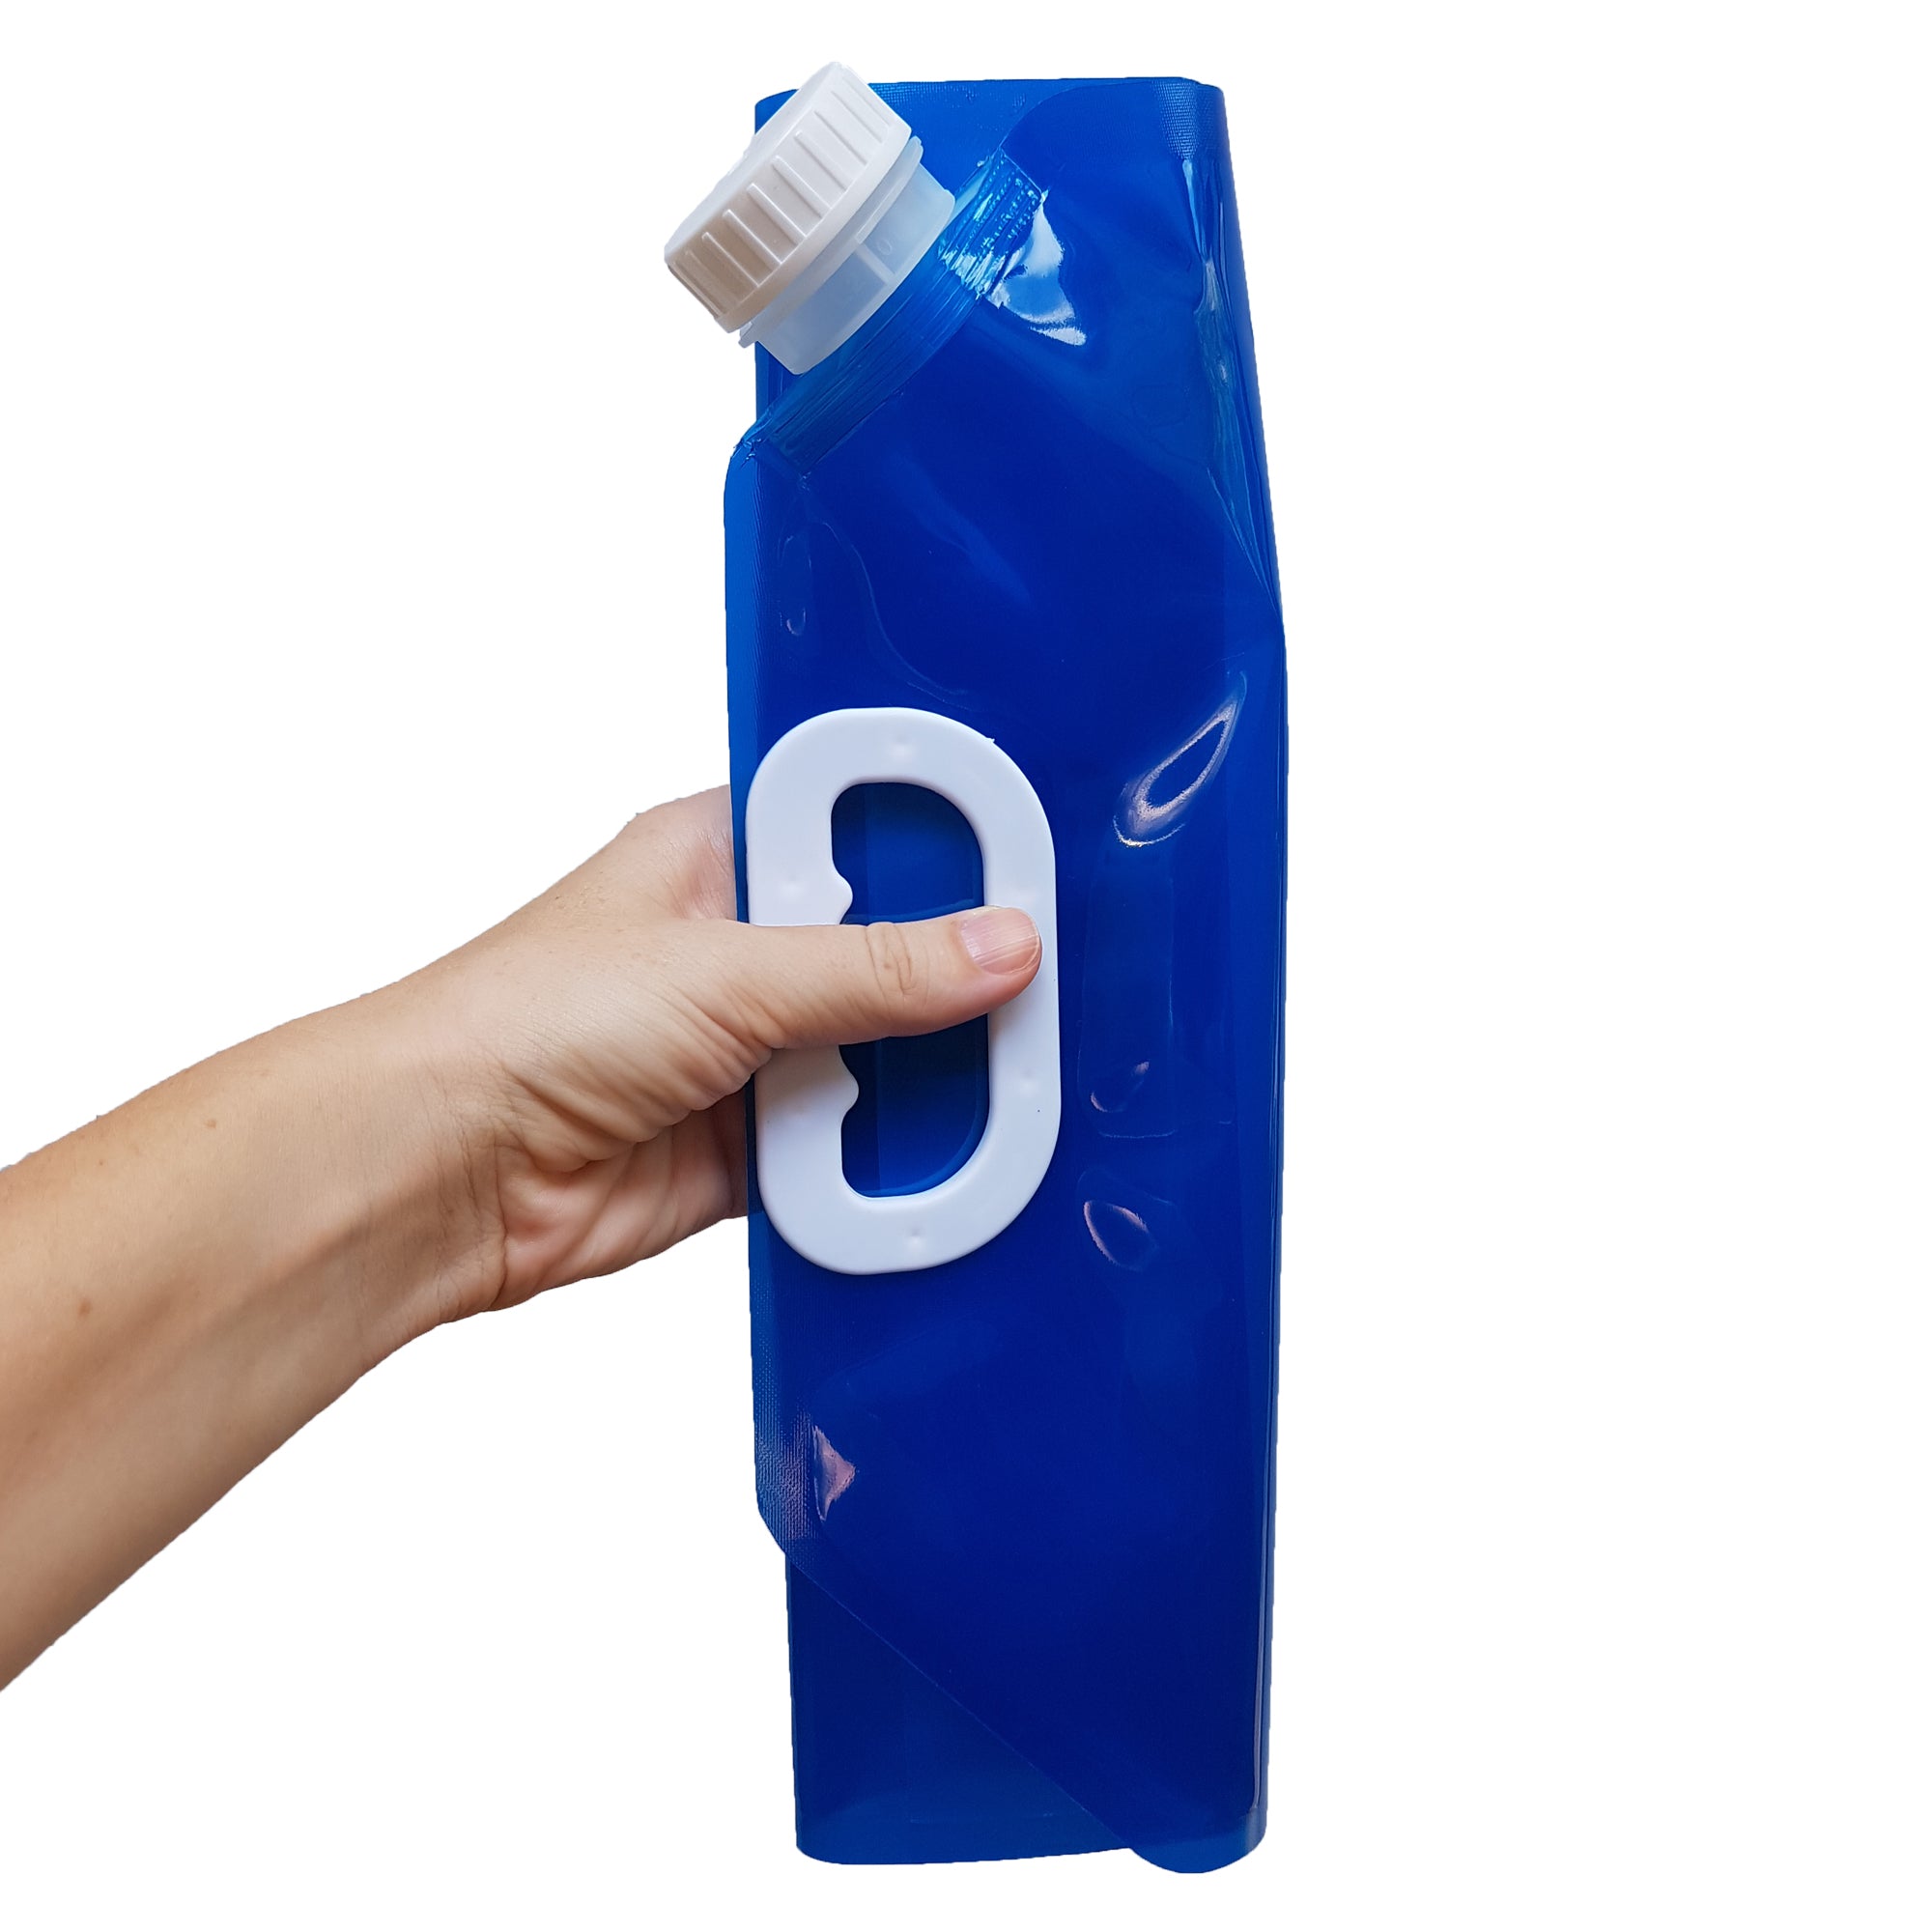 Water bottle Folded for storage